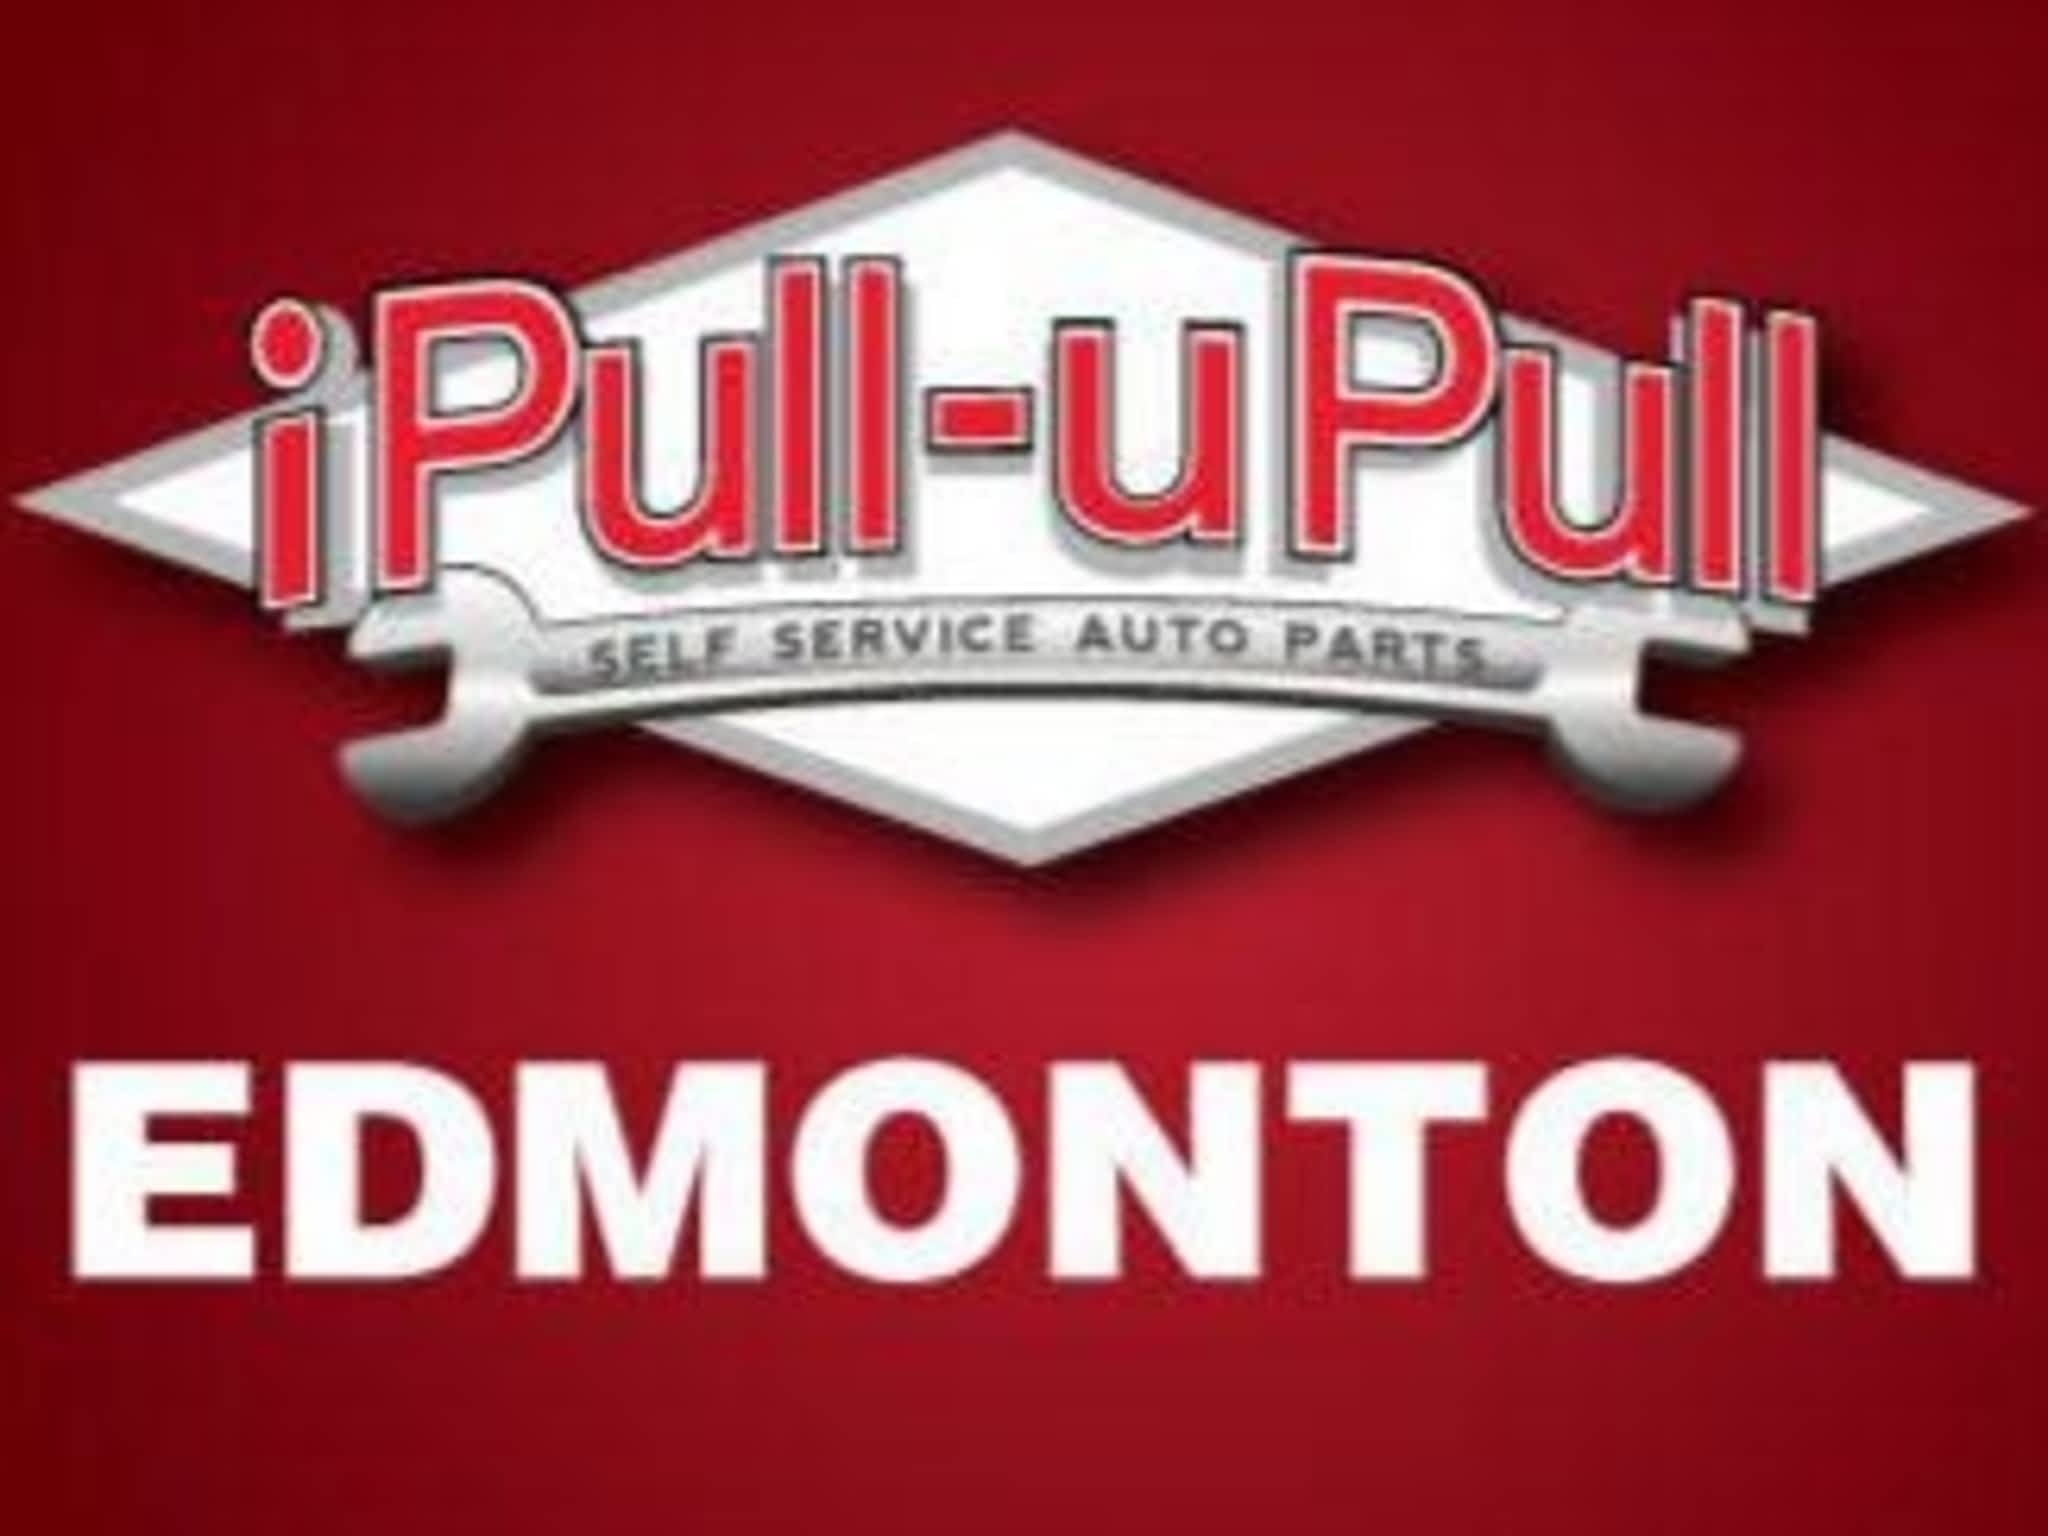 photo iPull-uPull Auto Parts - Edmonton, AB